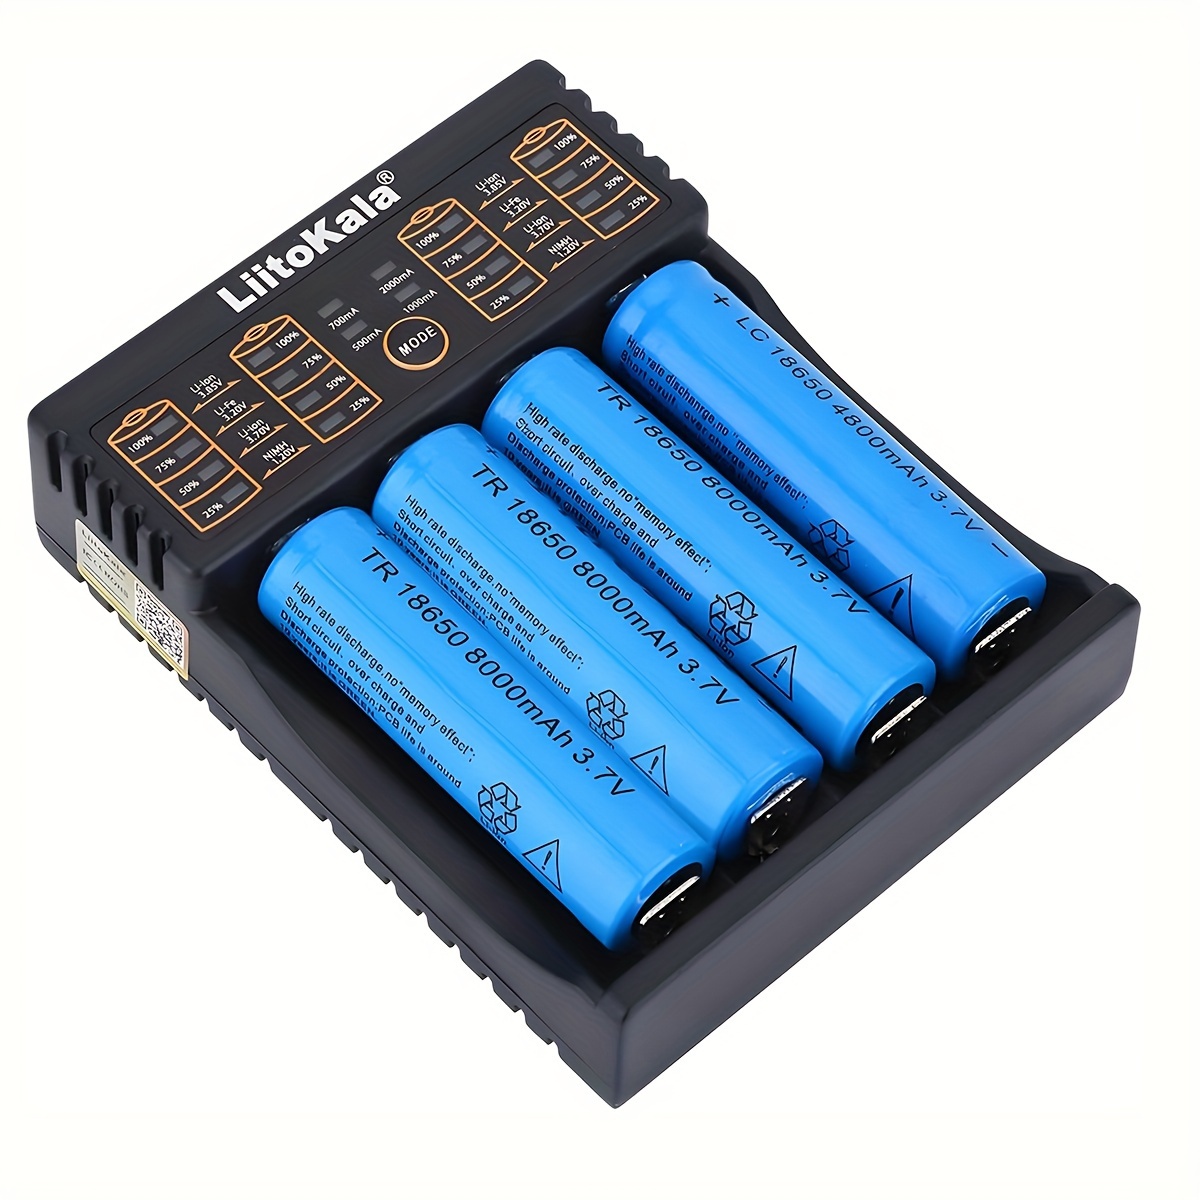  Cargador de batería 18650 de 4 bahías de carga rápida, para  baterías de iones de litio de 3.7 V TR IMR 10440 14500 16650 14650 18350  18500 16340 (RCR123), cargador de batería recargable universal inteligente  USB : Electrónica